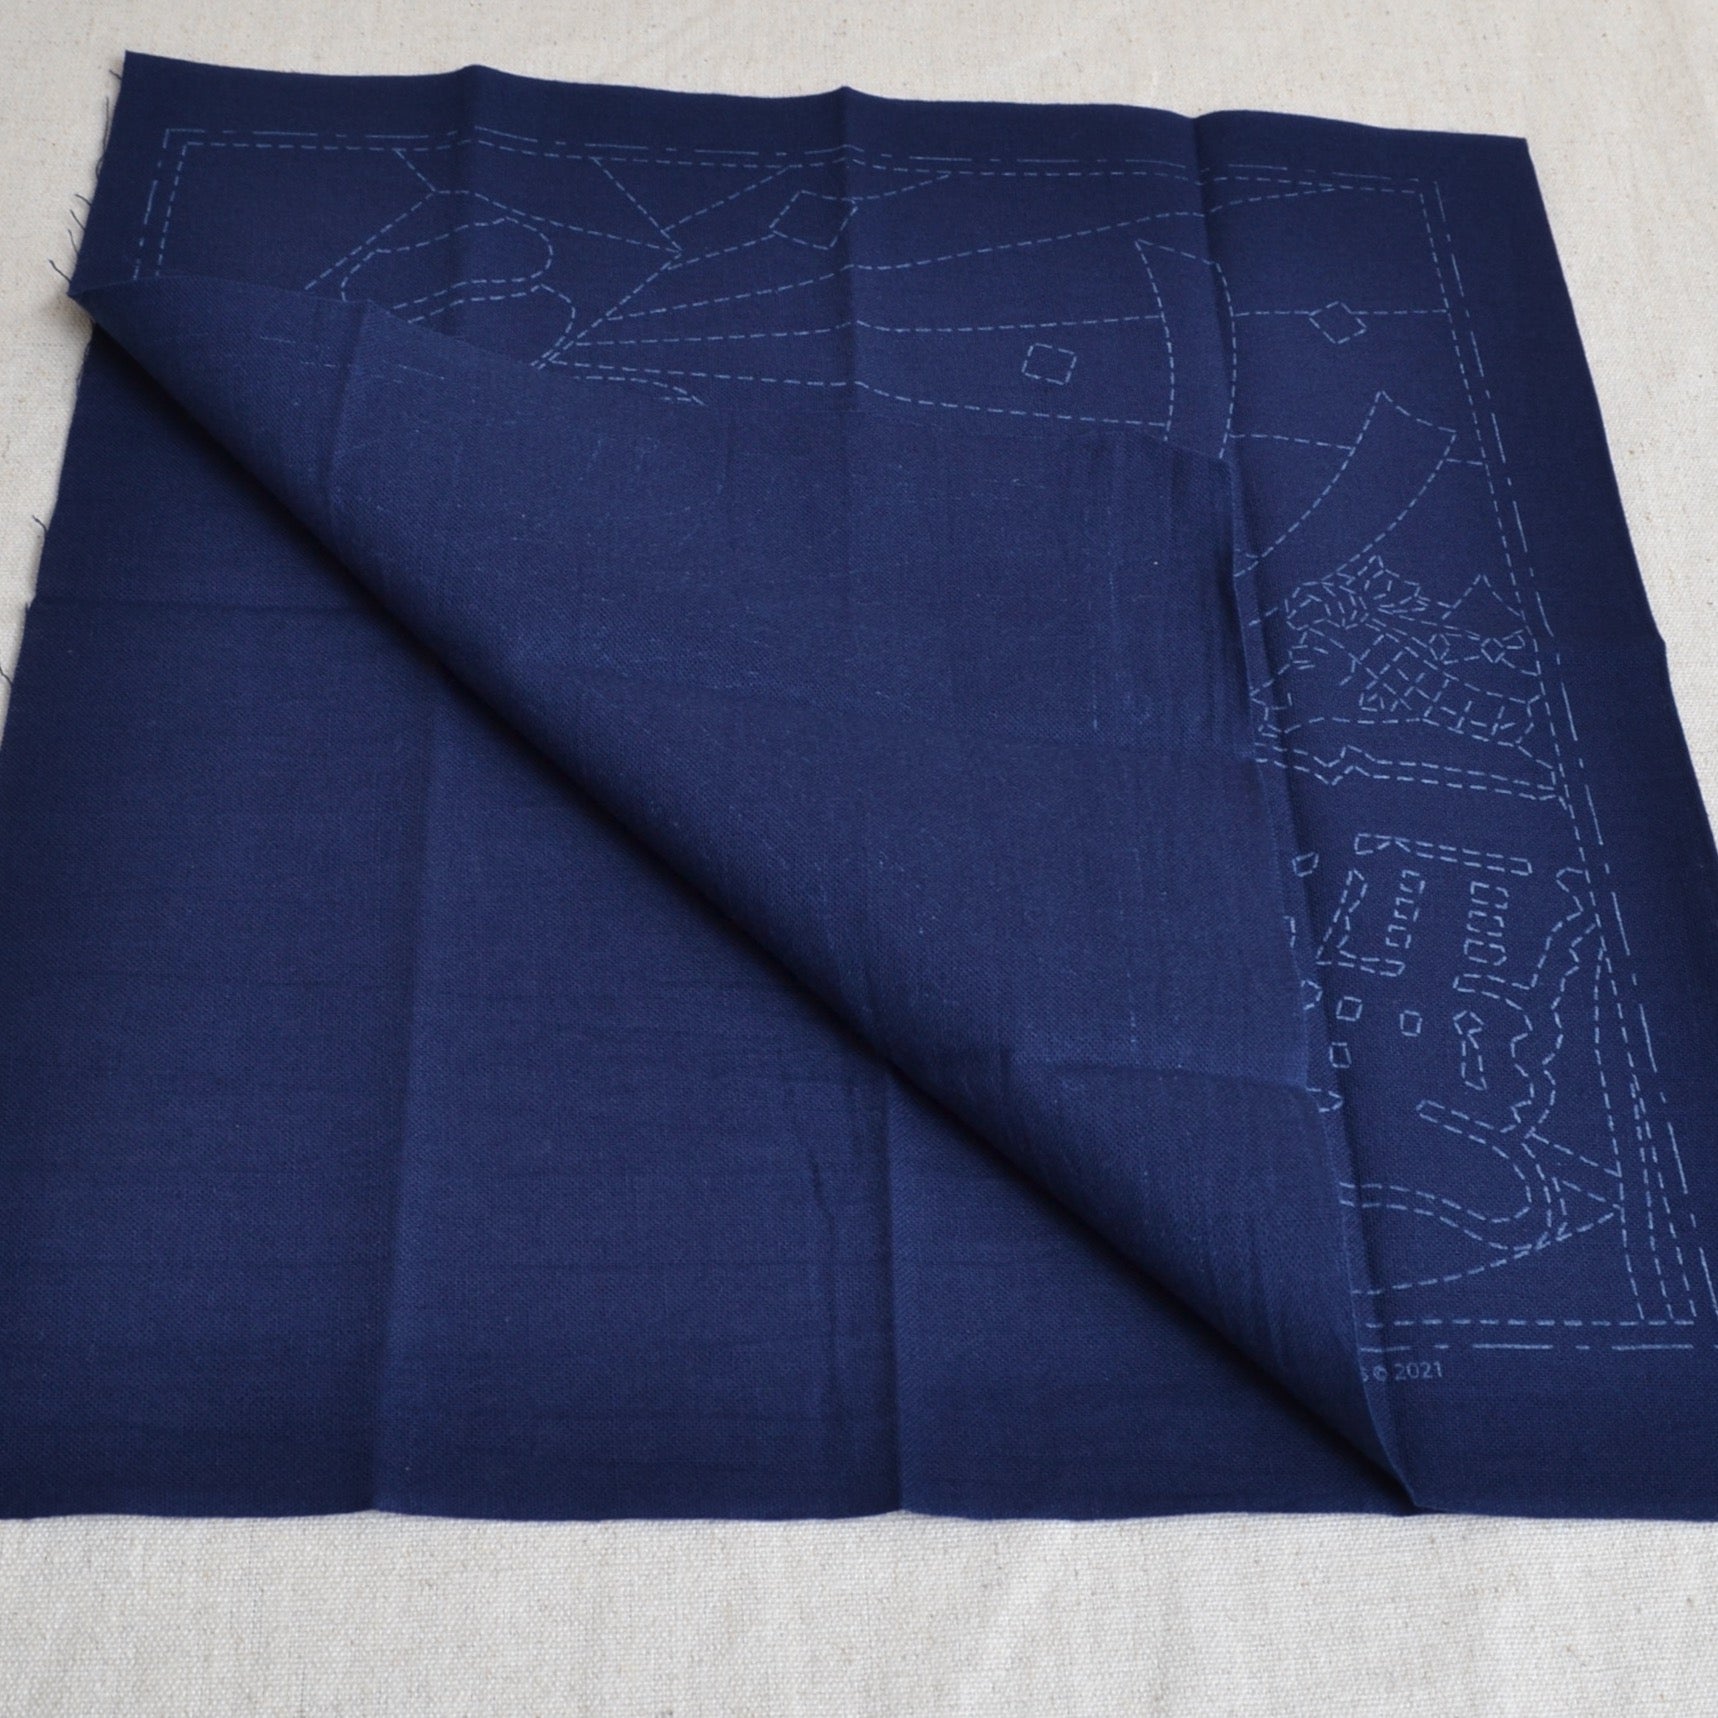 Showing both sides of pre printed sashiko cloth